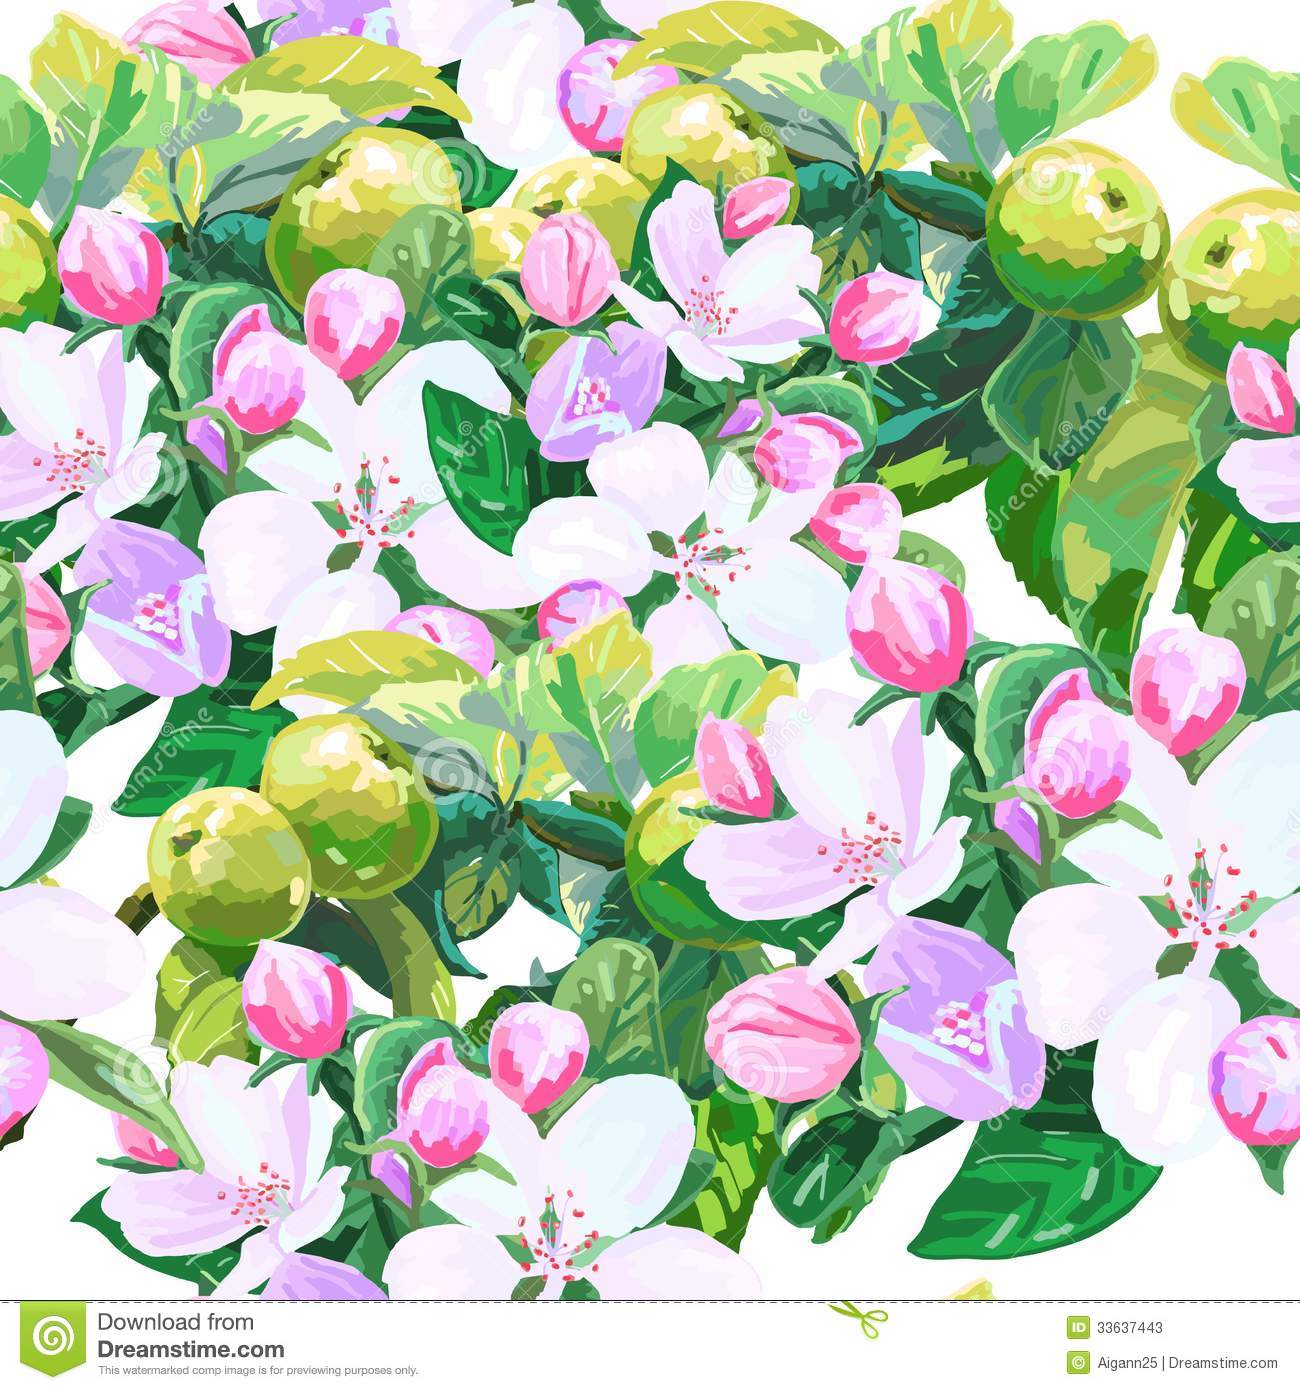 Apple Blossom Drawings